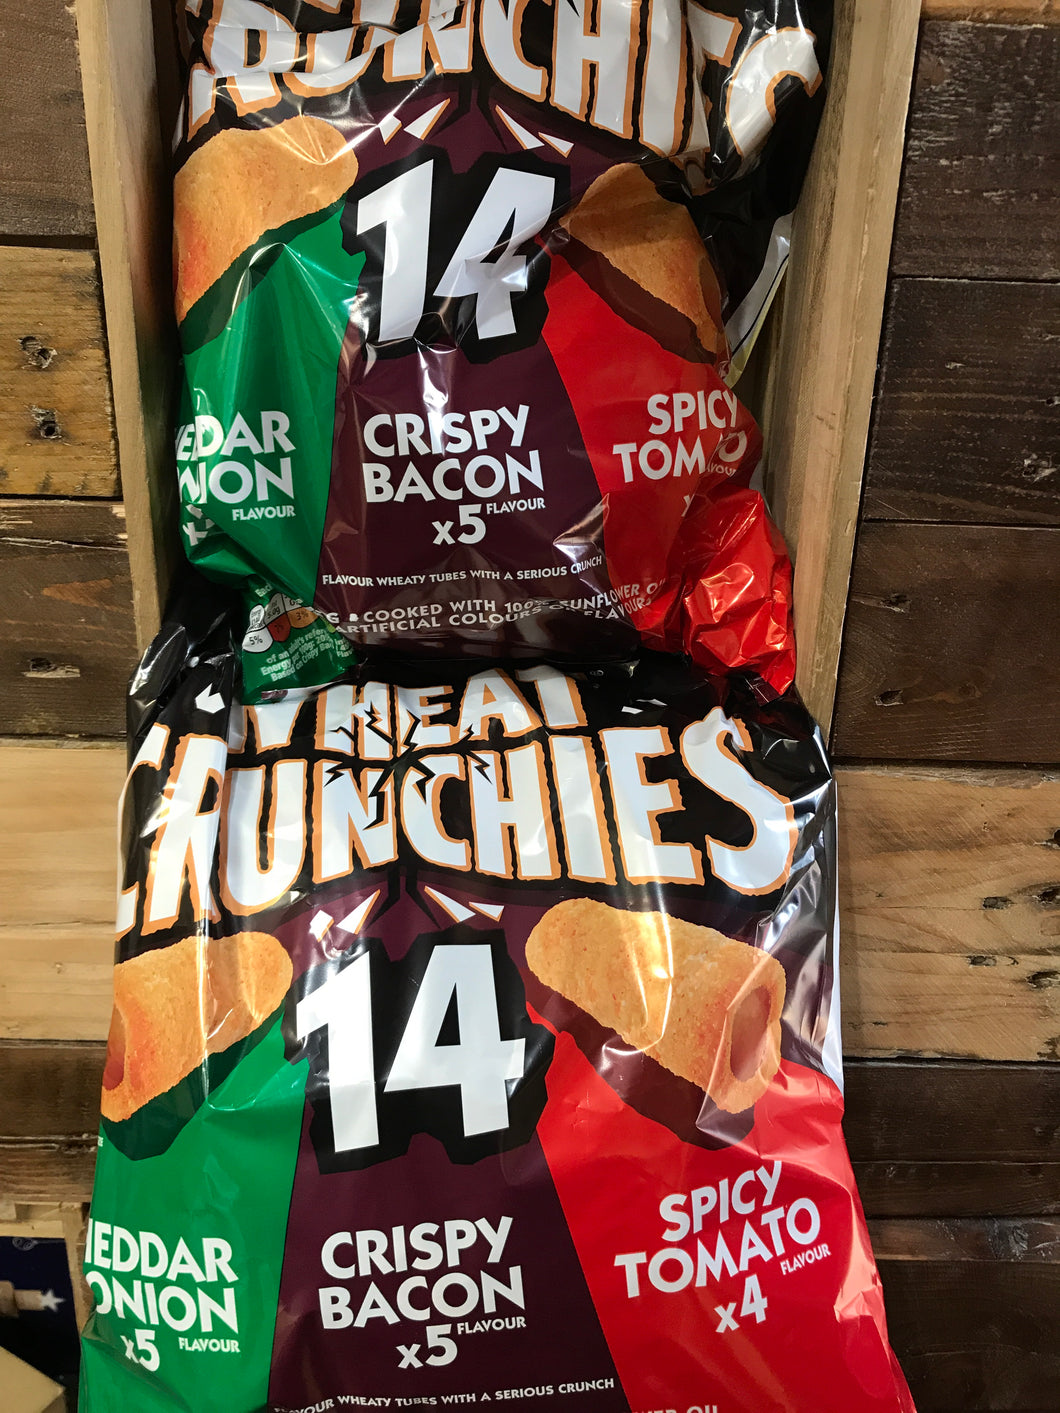 28x Wheat Crunchies Assorted Pack (2x14 Packs x20g)